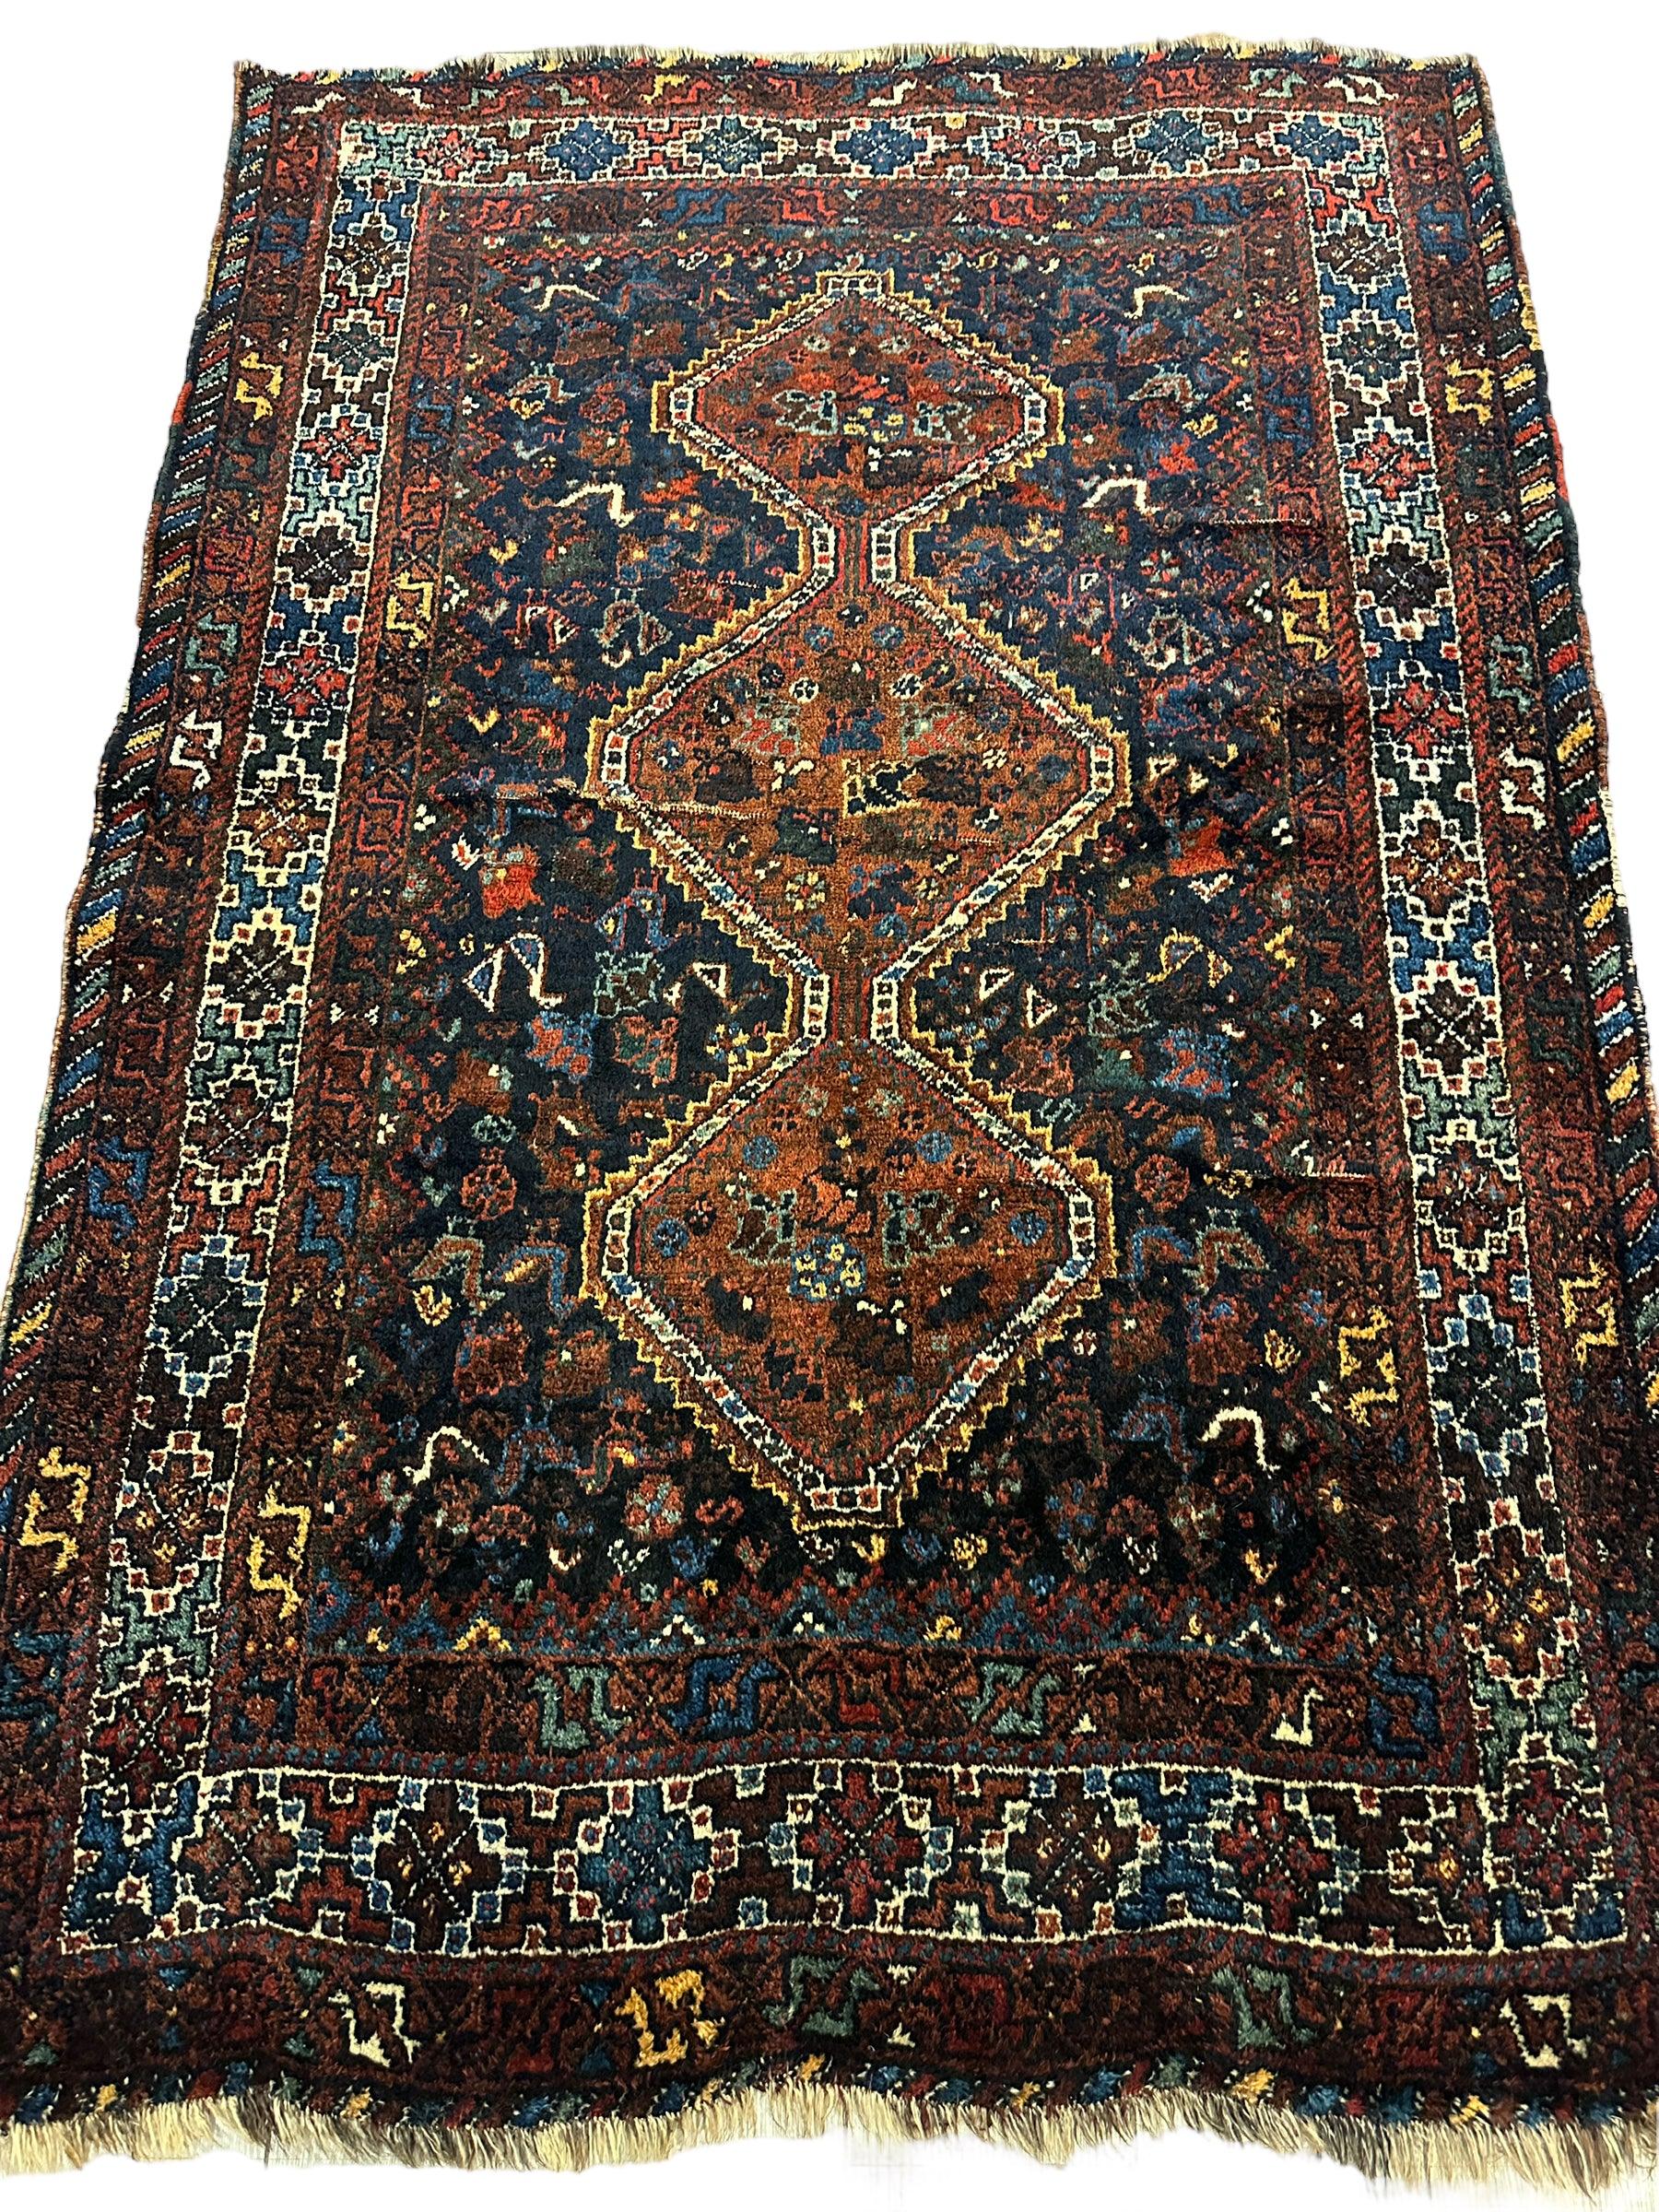 Antique Persian Khamseh Tribal Rug 4' x 5’10”